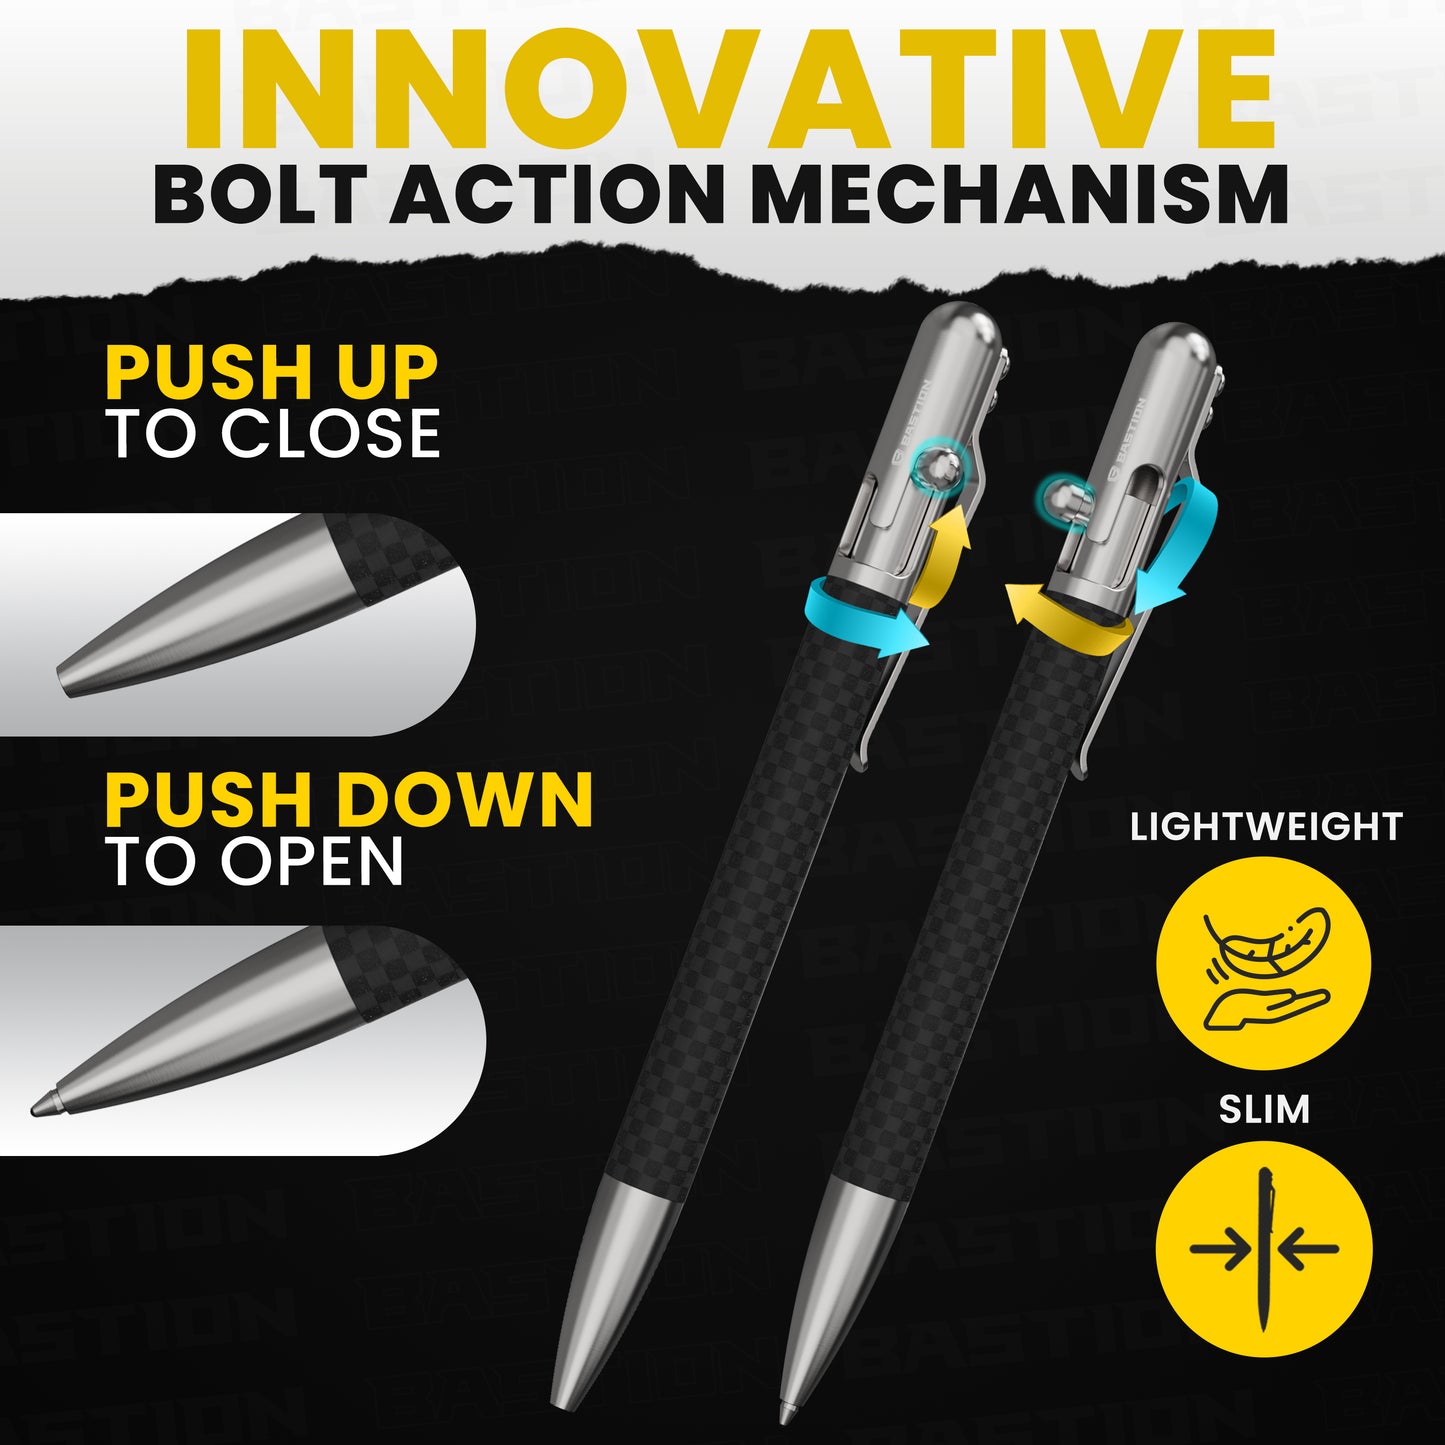 Carbon Fiber and Stainless Steel - Slim Bolt Action Pen by Bastion® - Bastion Bolt Action Pen